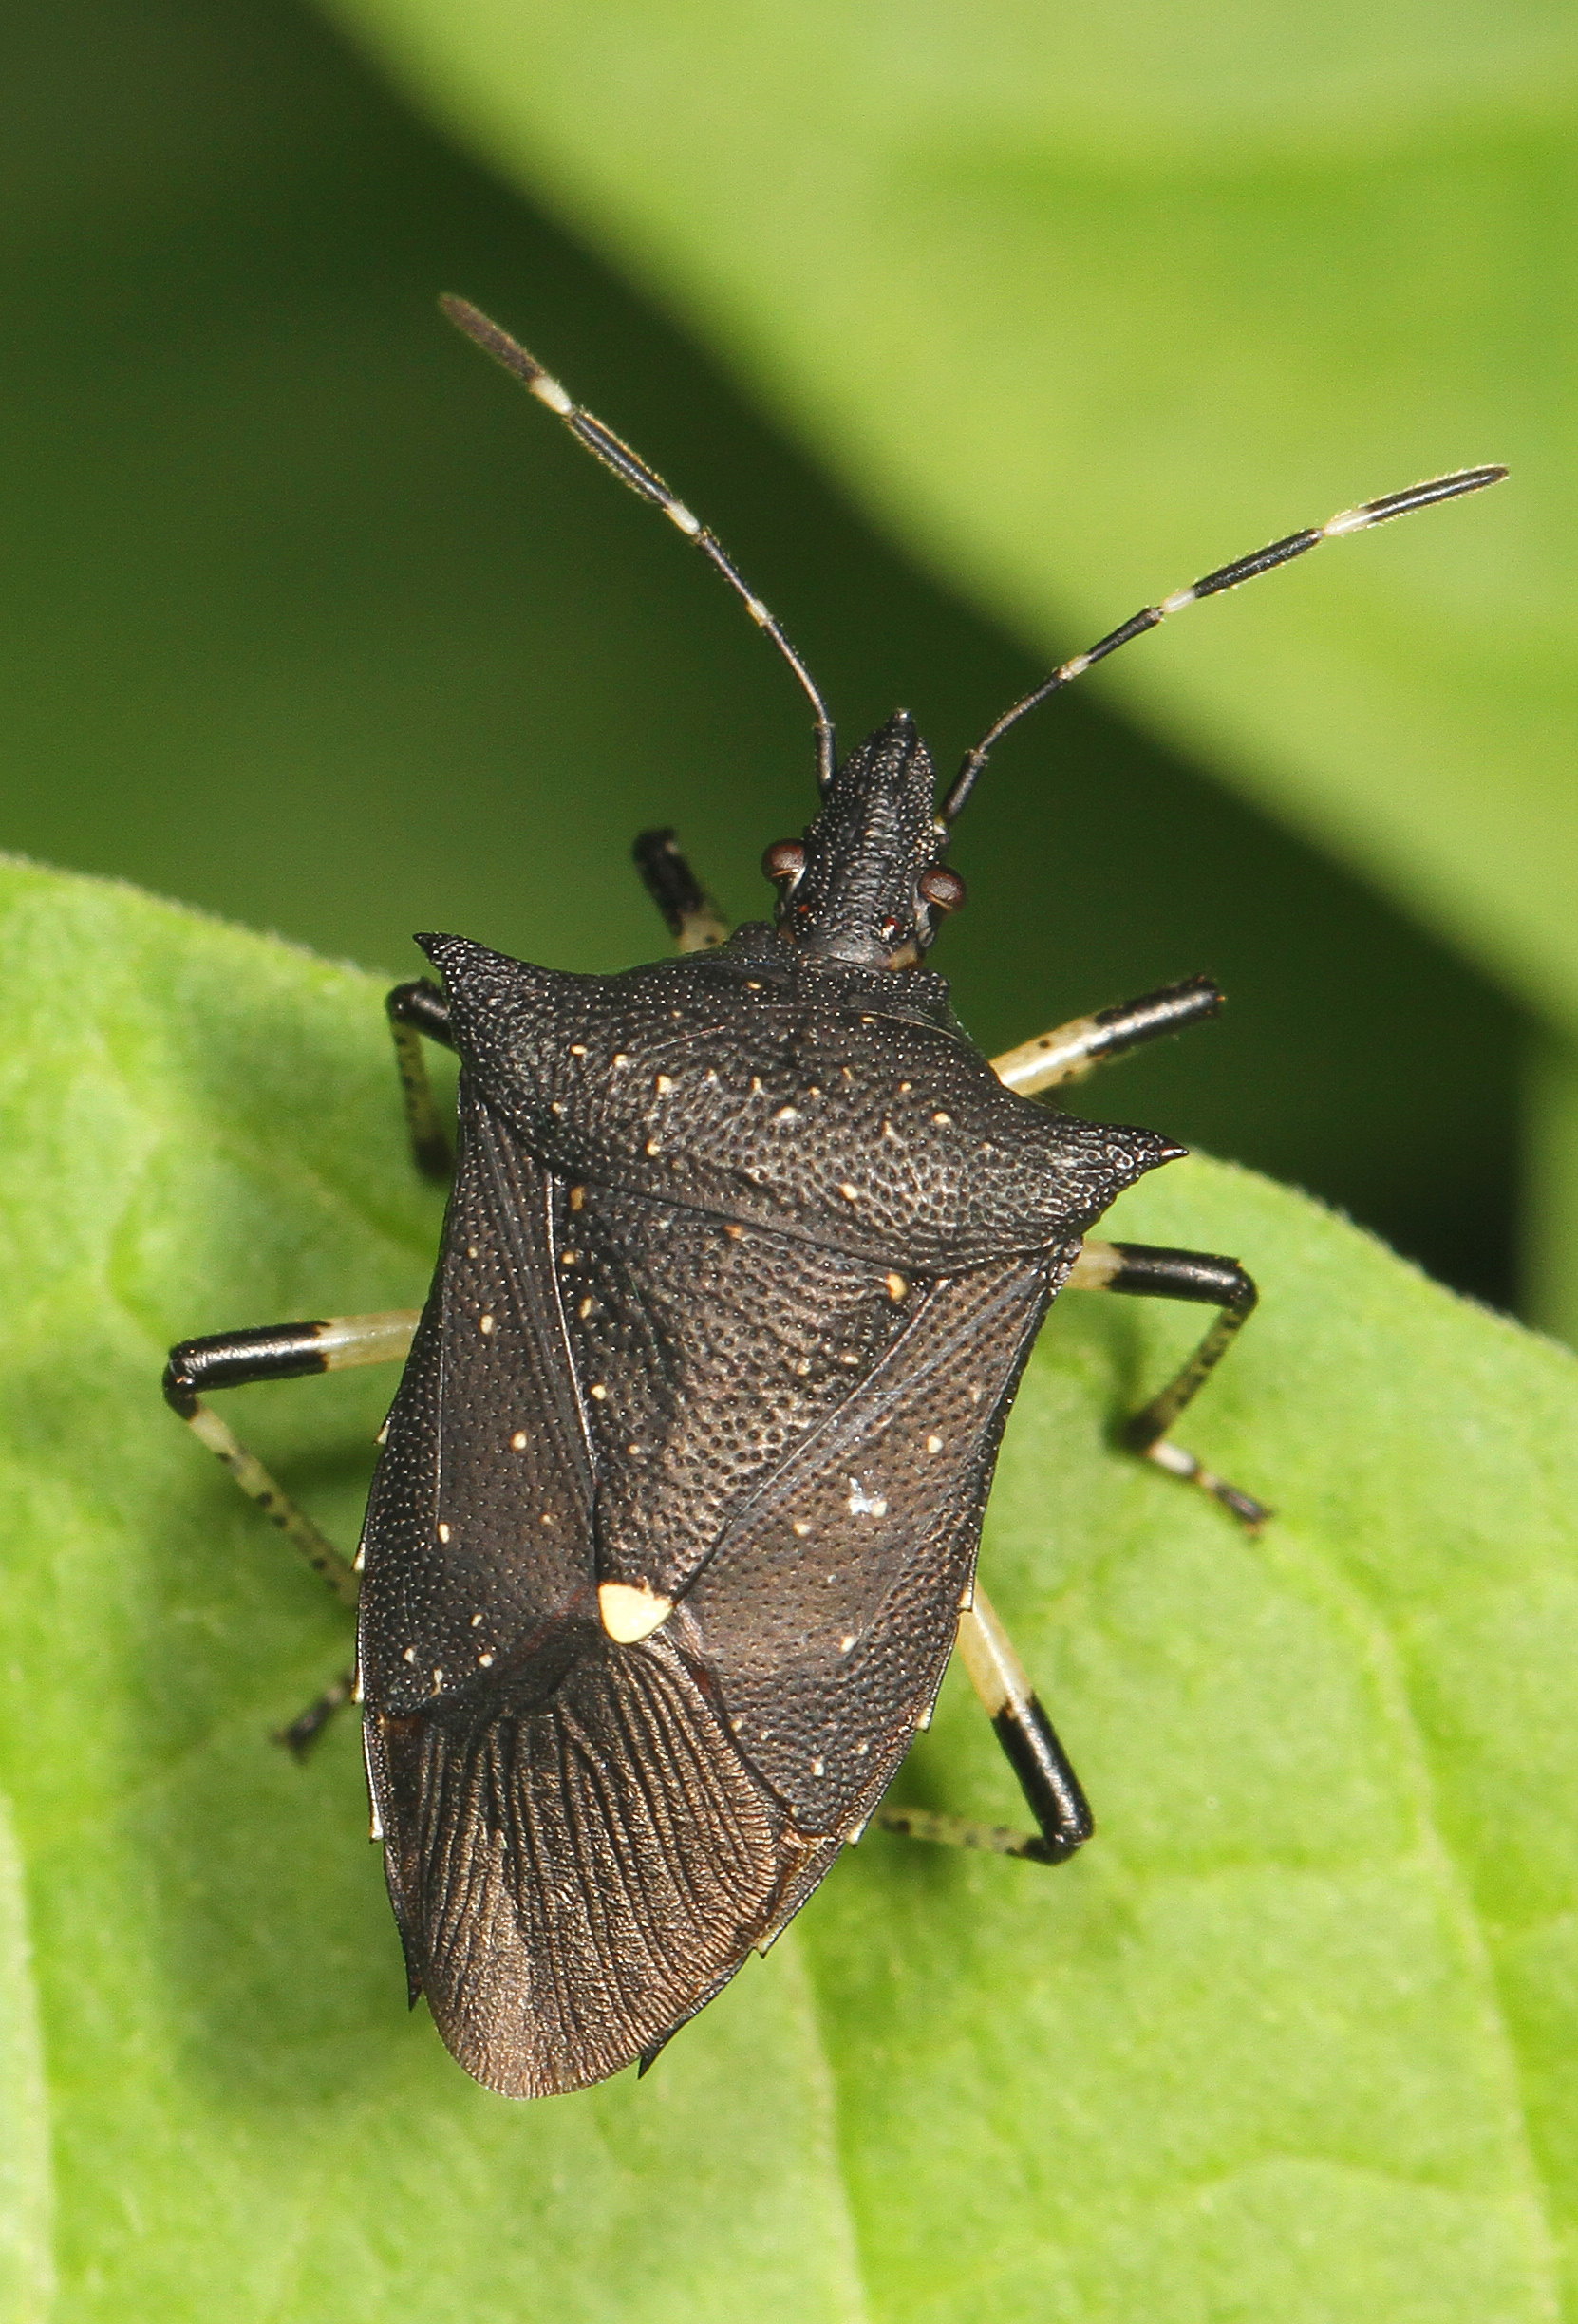 Black Stink Bug - Proxys punctulatus, Woodbridge, Virginia